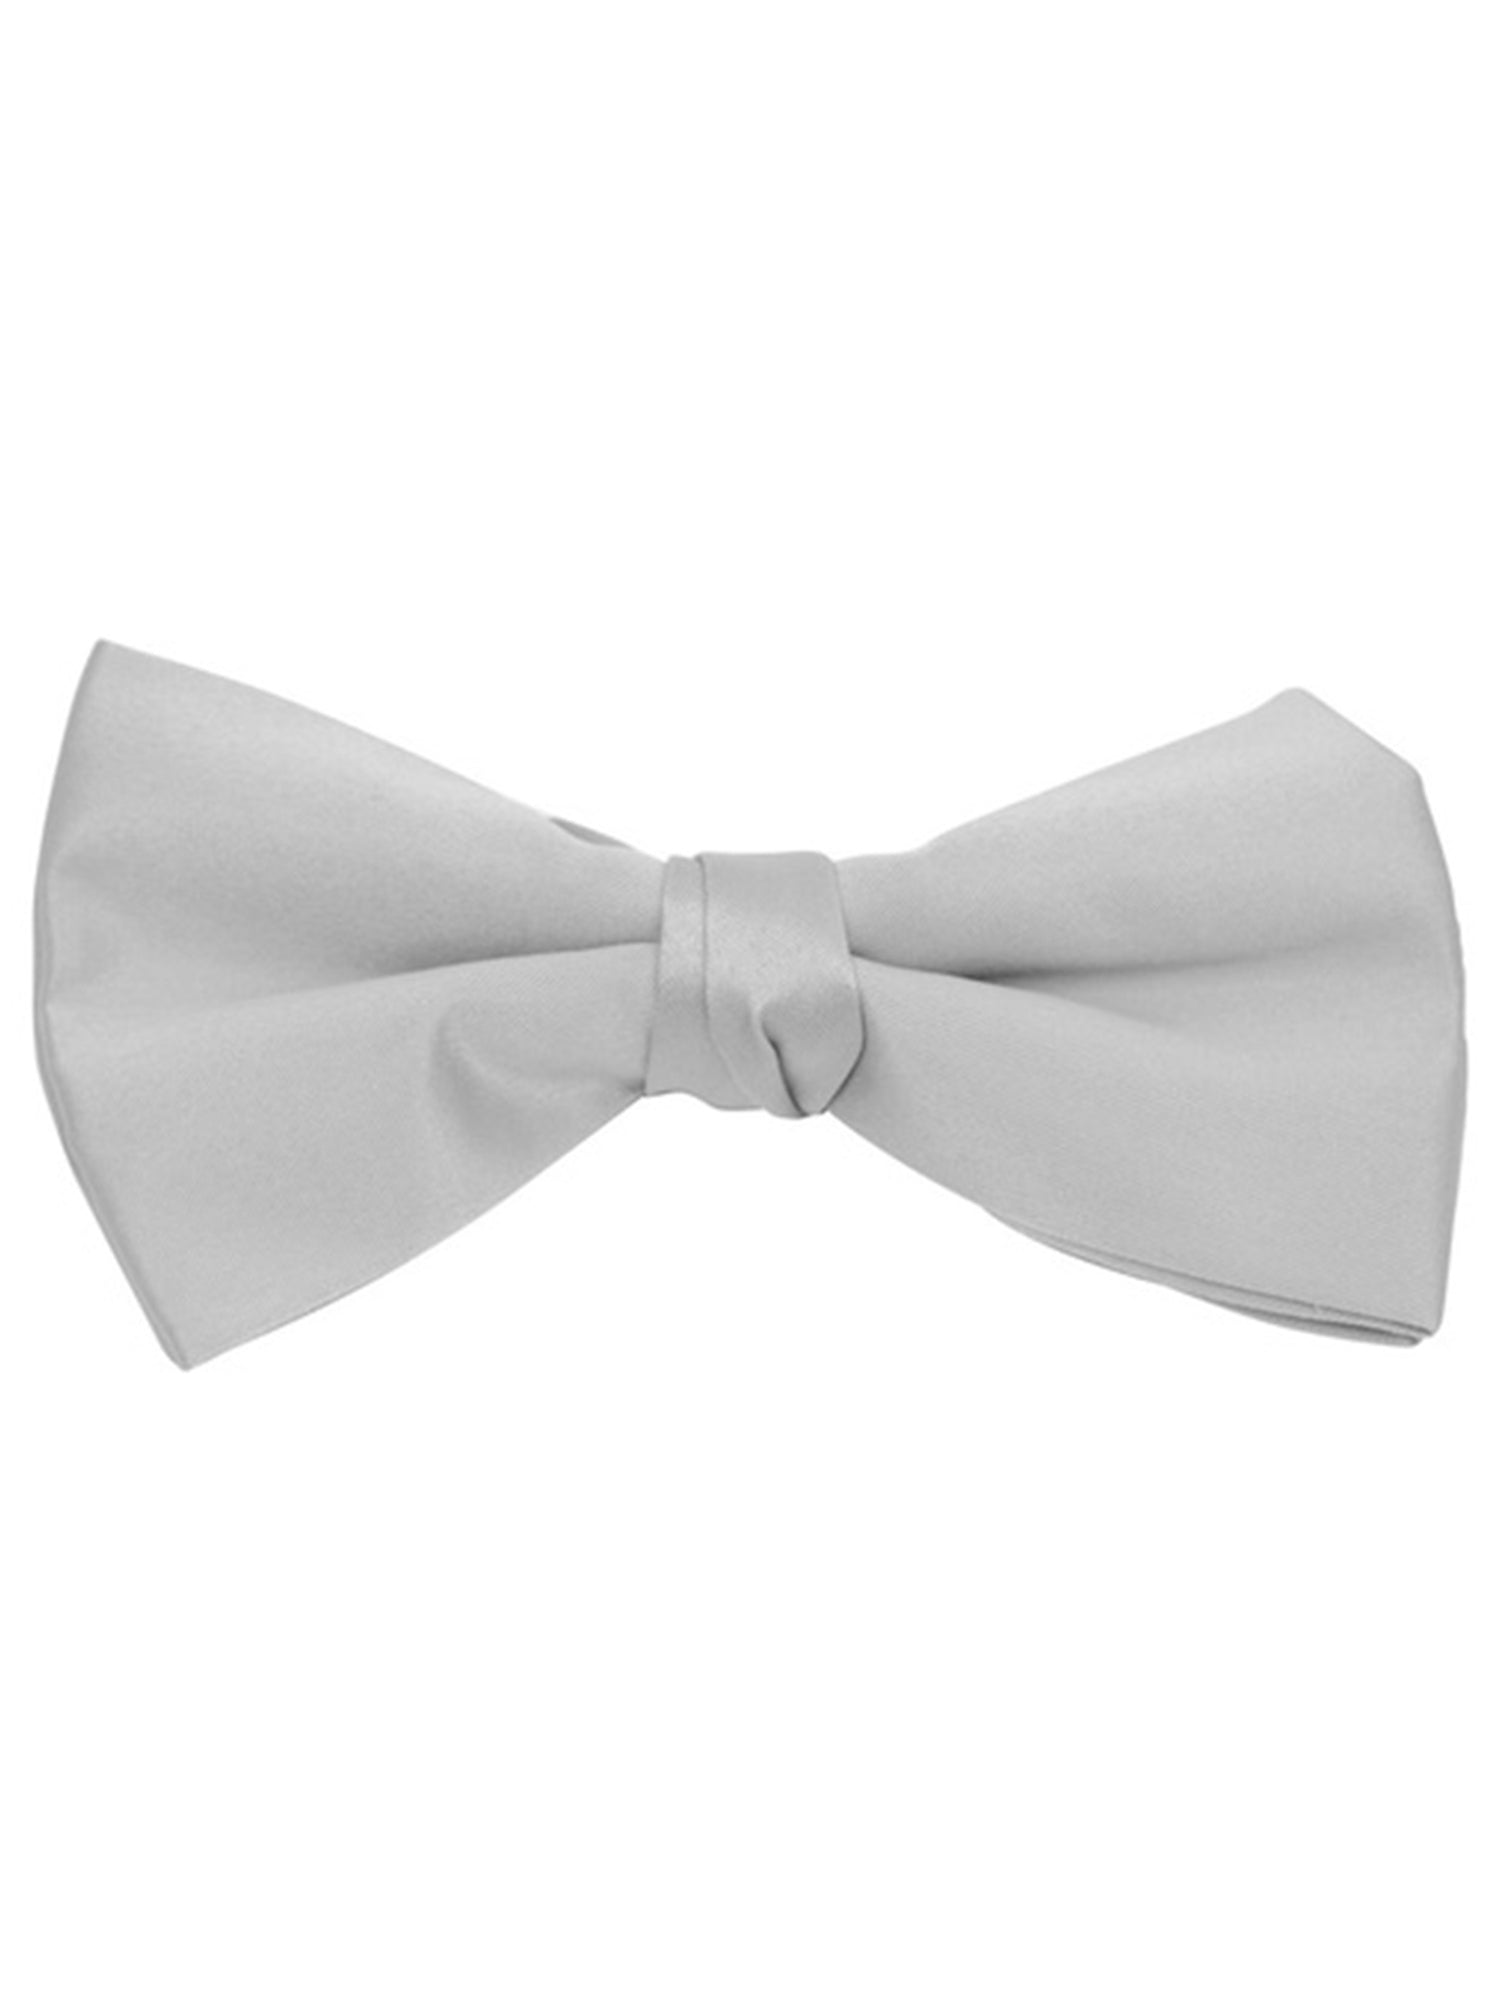 Men's Pre-tied Clip On Bow Tie - Formal Tuxedo Solid Color Men's Solid Color Bow Tie TheDapperTie Silver One Size 